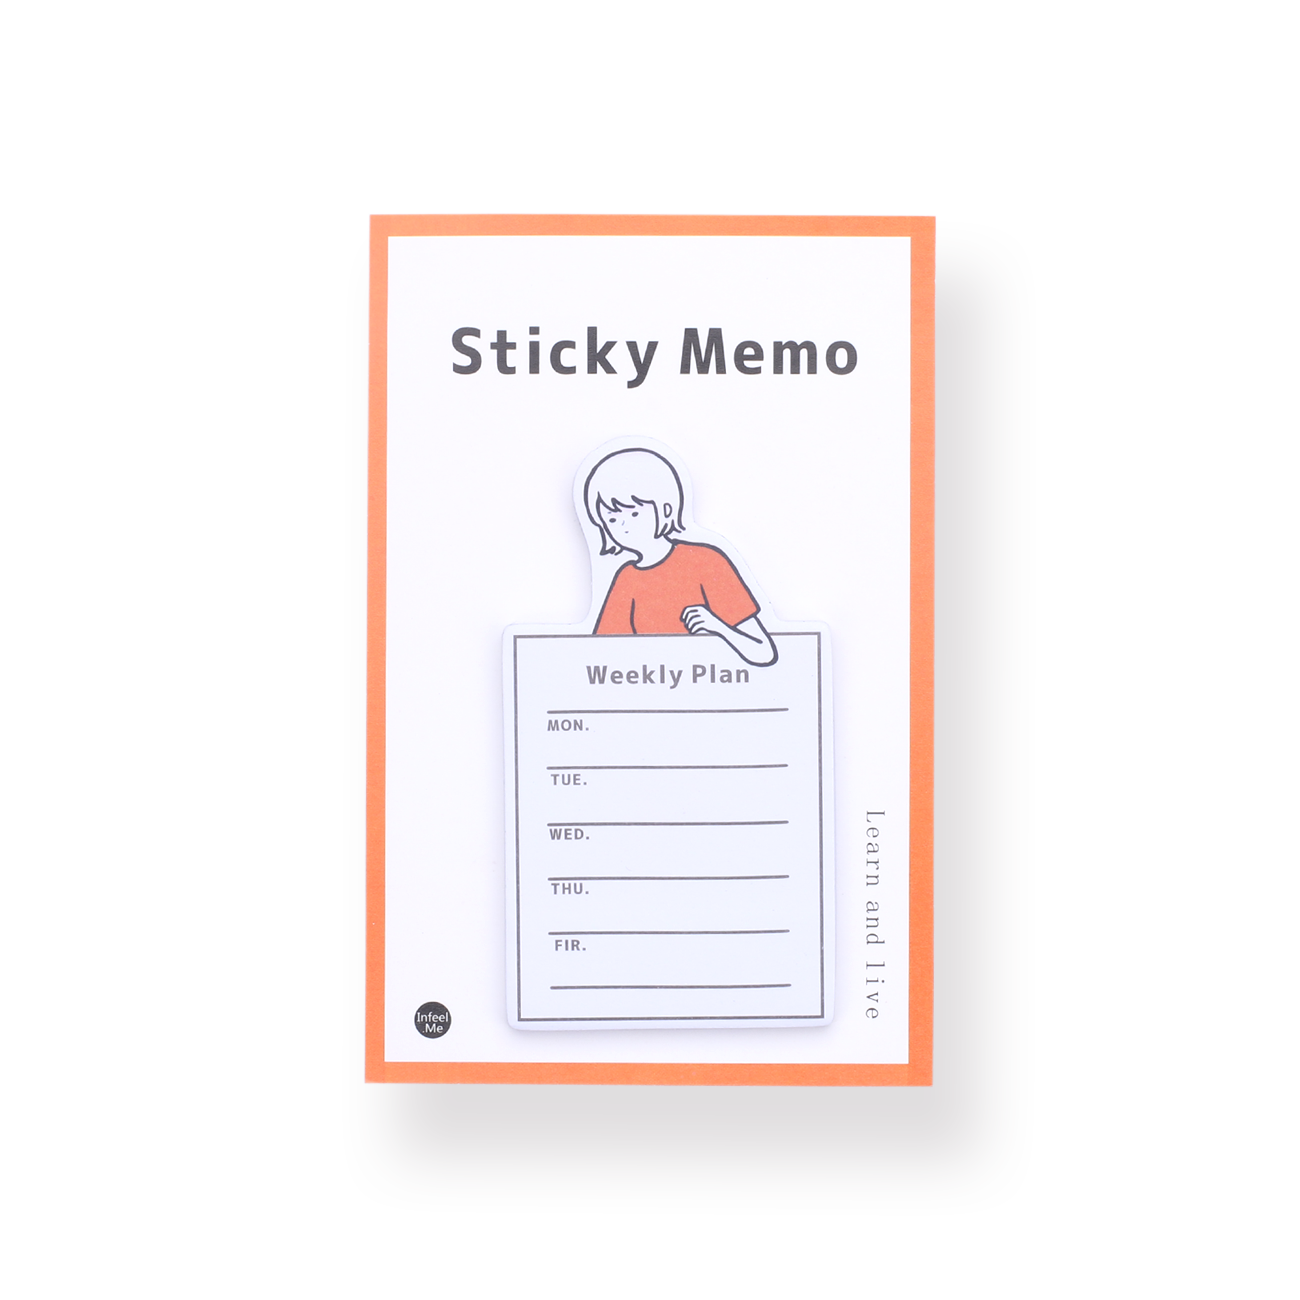 Sticky Memo - Weekly Plan